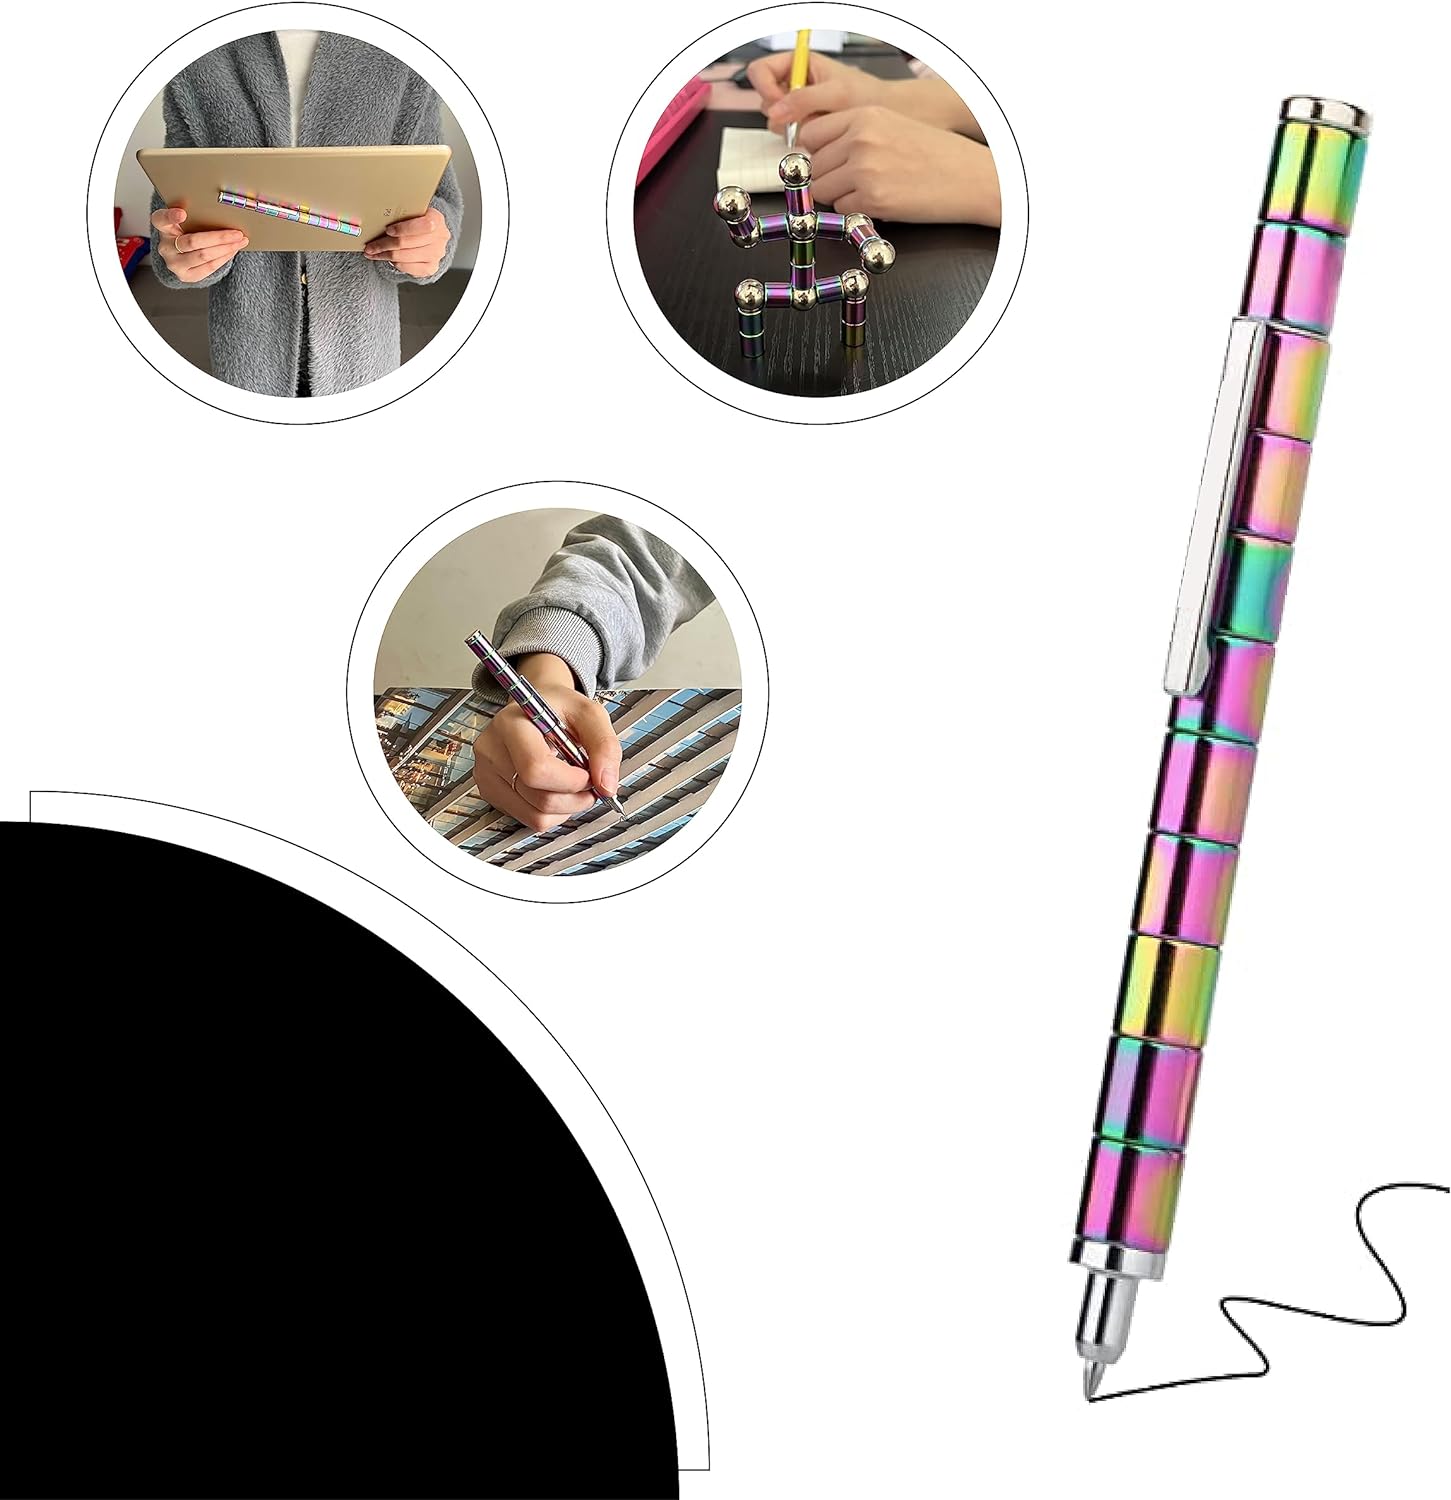 Magnetic Metal Fidget Pen-Deformable(Multicolor)